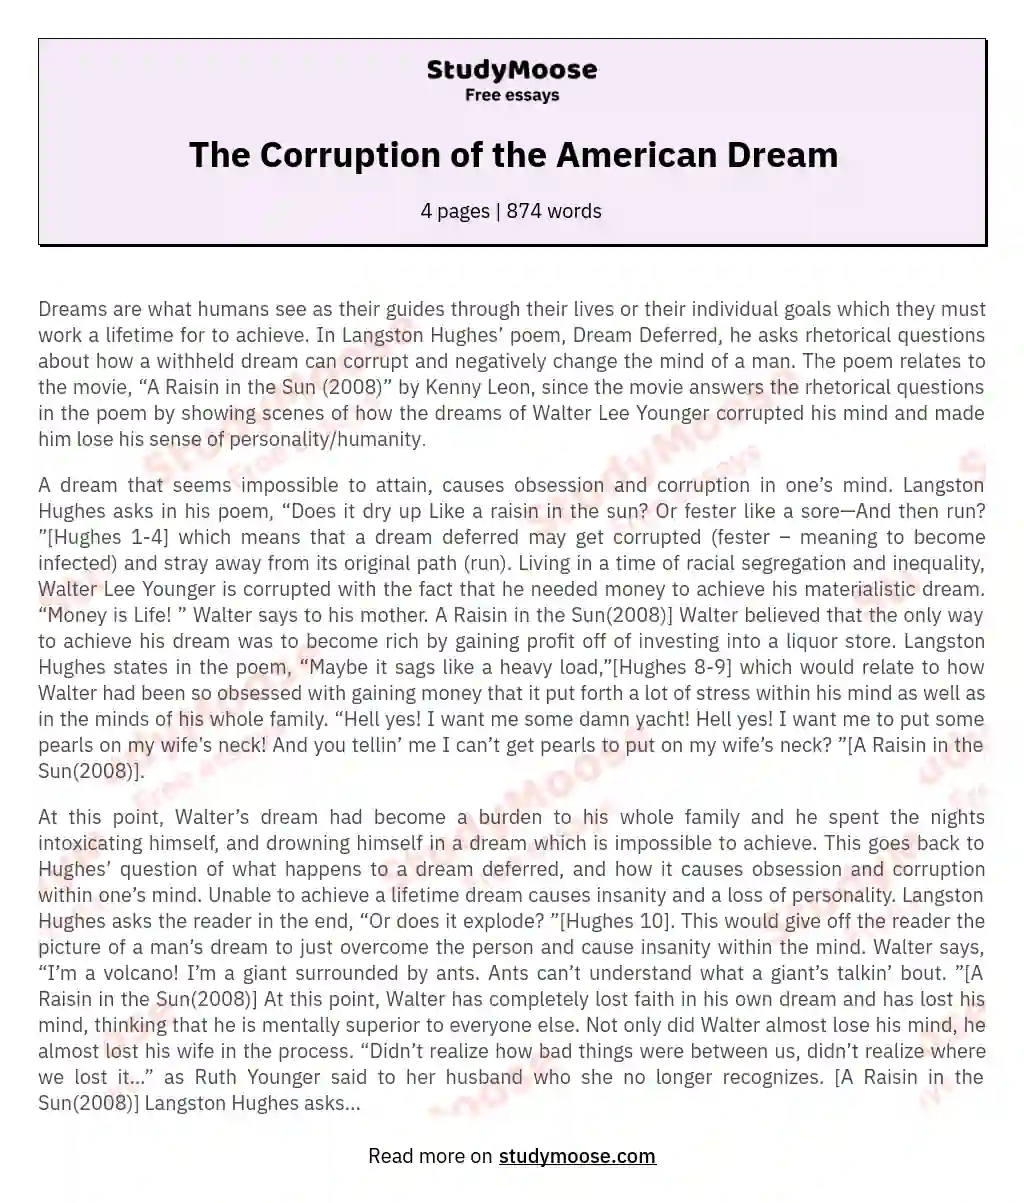 The Corruption of the American Dream essay